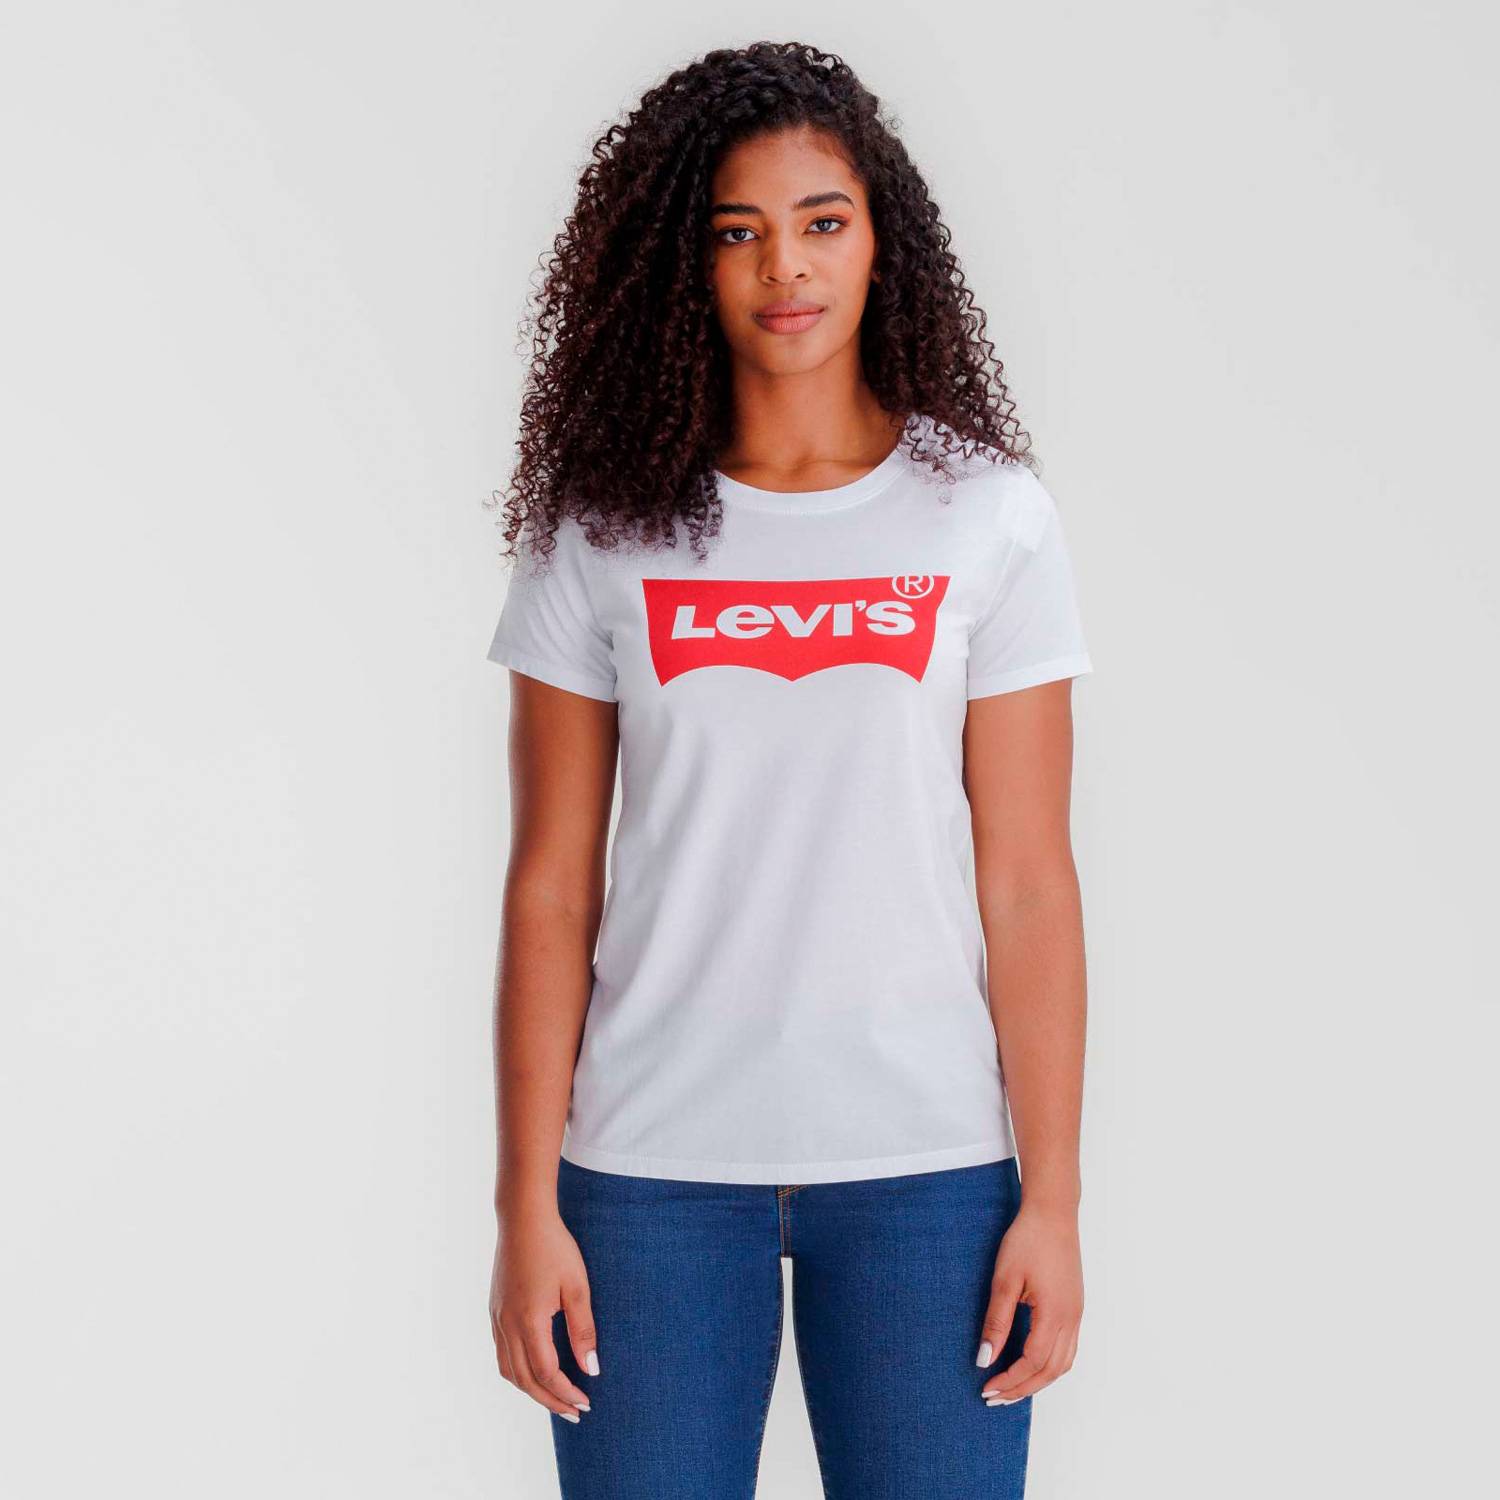 marxista Proporcional Leonardoda Camiseta Manga corta Levis Mujer LEVIS | falabella.com